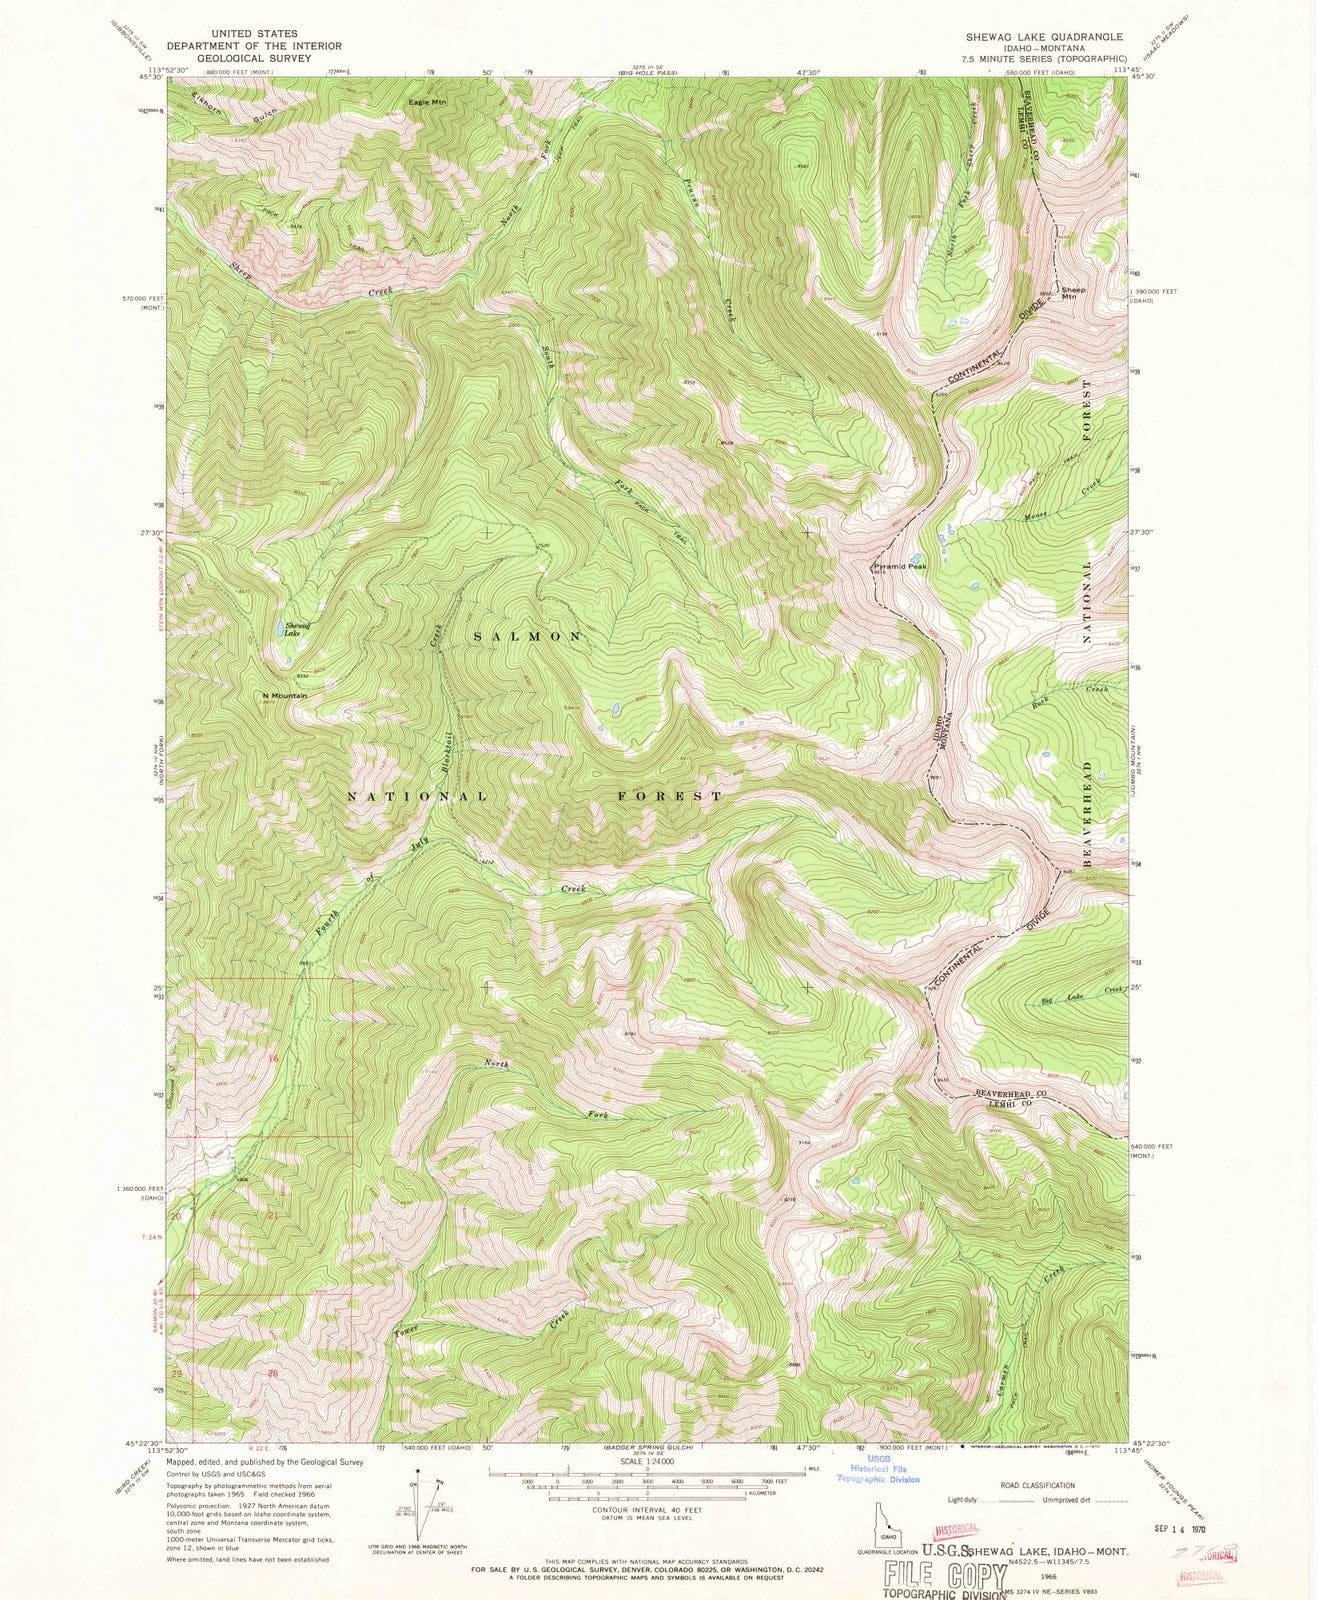 1966 Shewag Lake, ID - Idaho - USGS Topographic Map